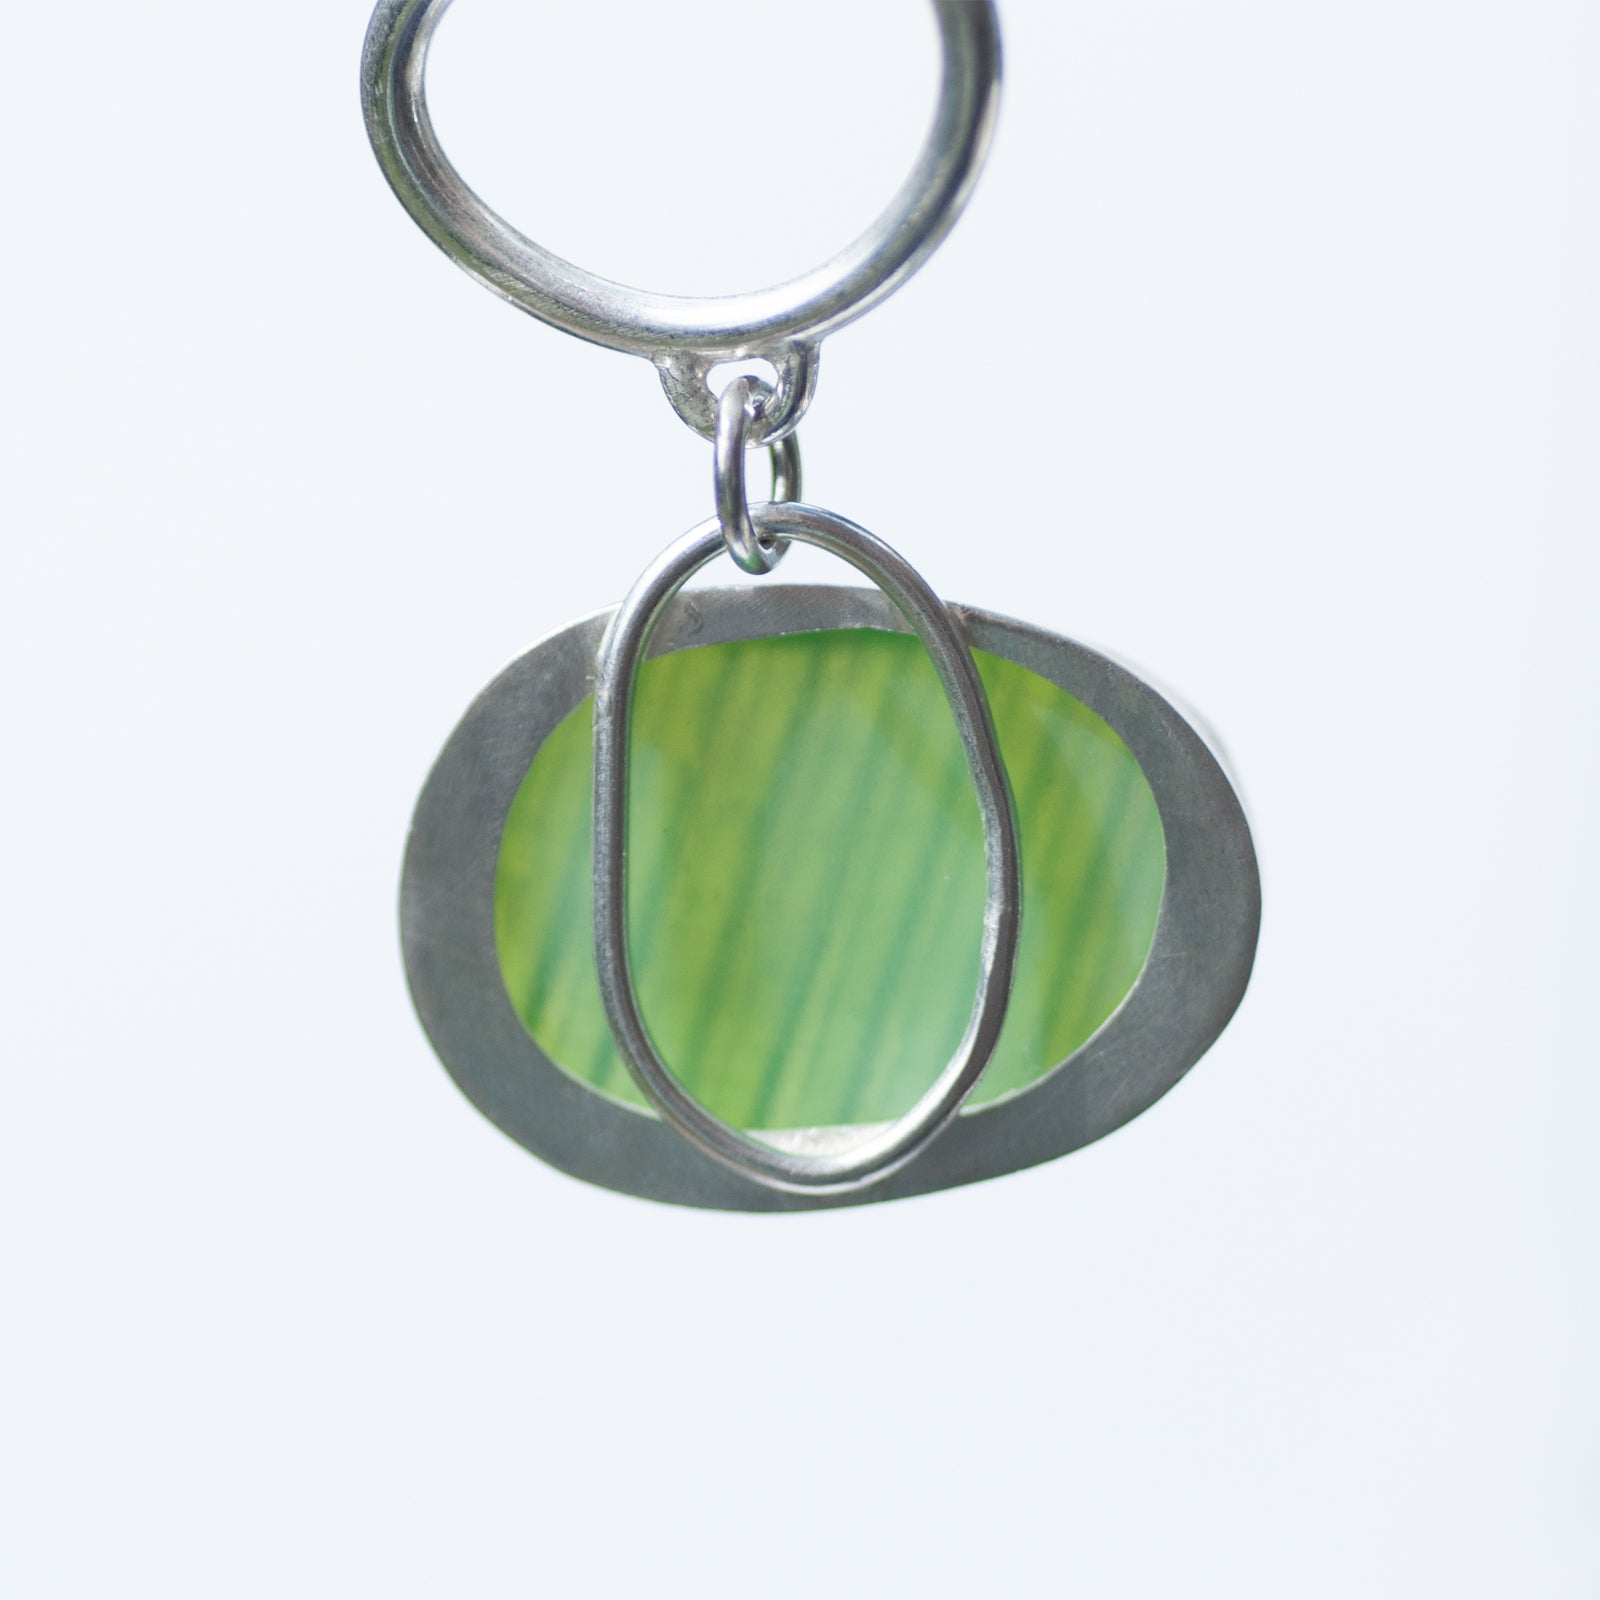 Pebble Collection Trio necklace - Lime Green Milk Sea Glass